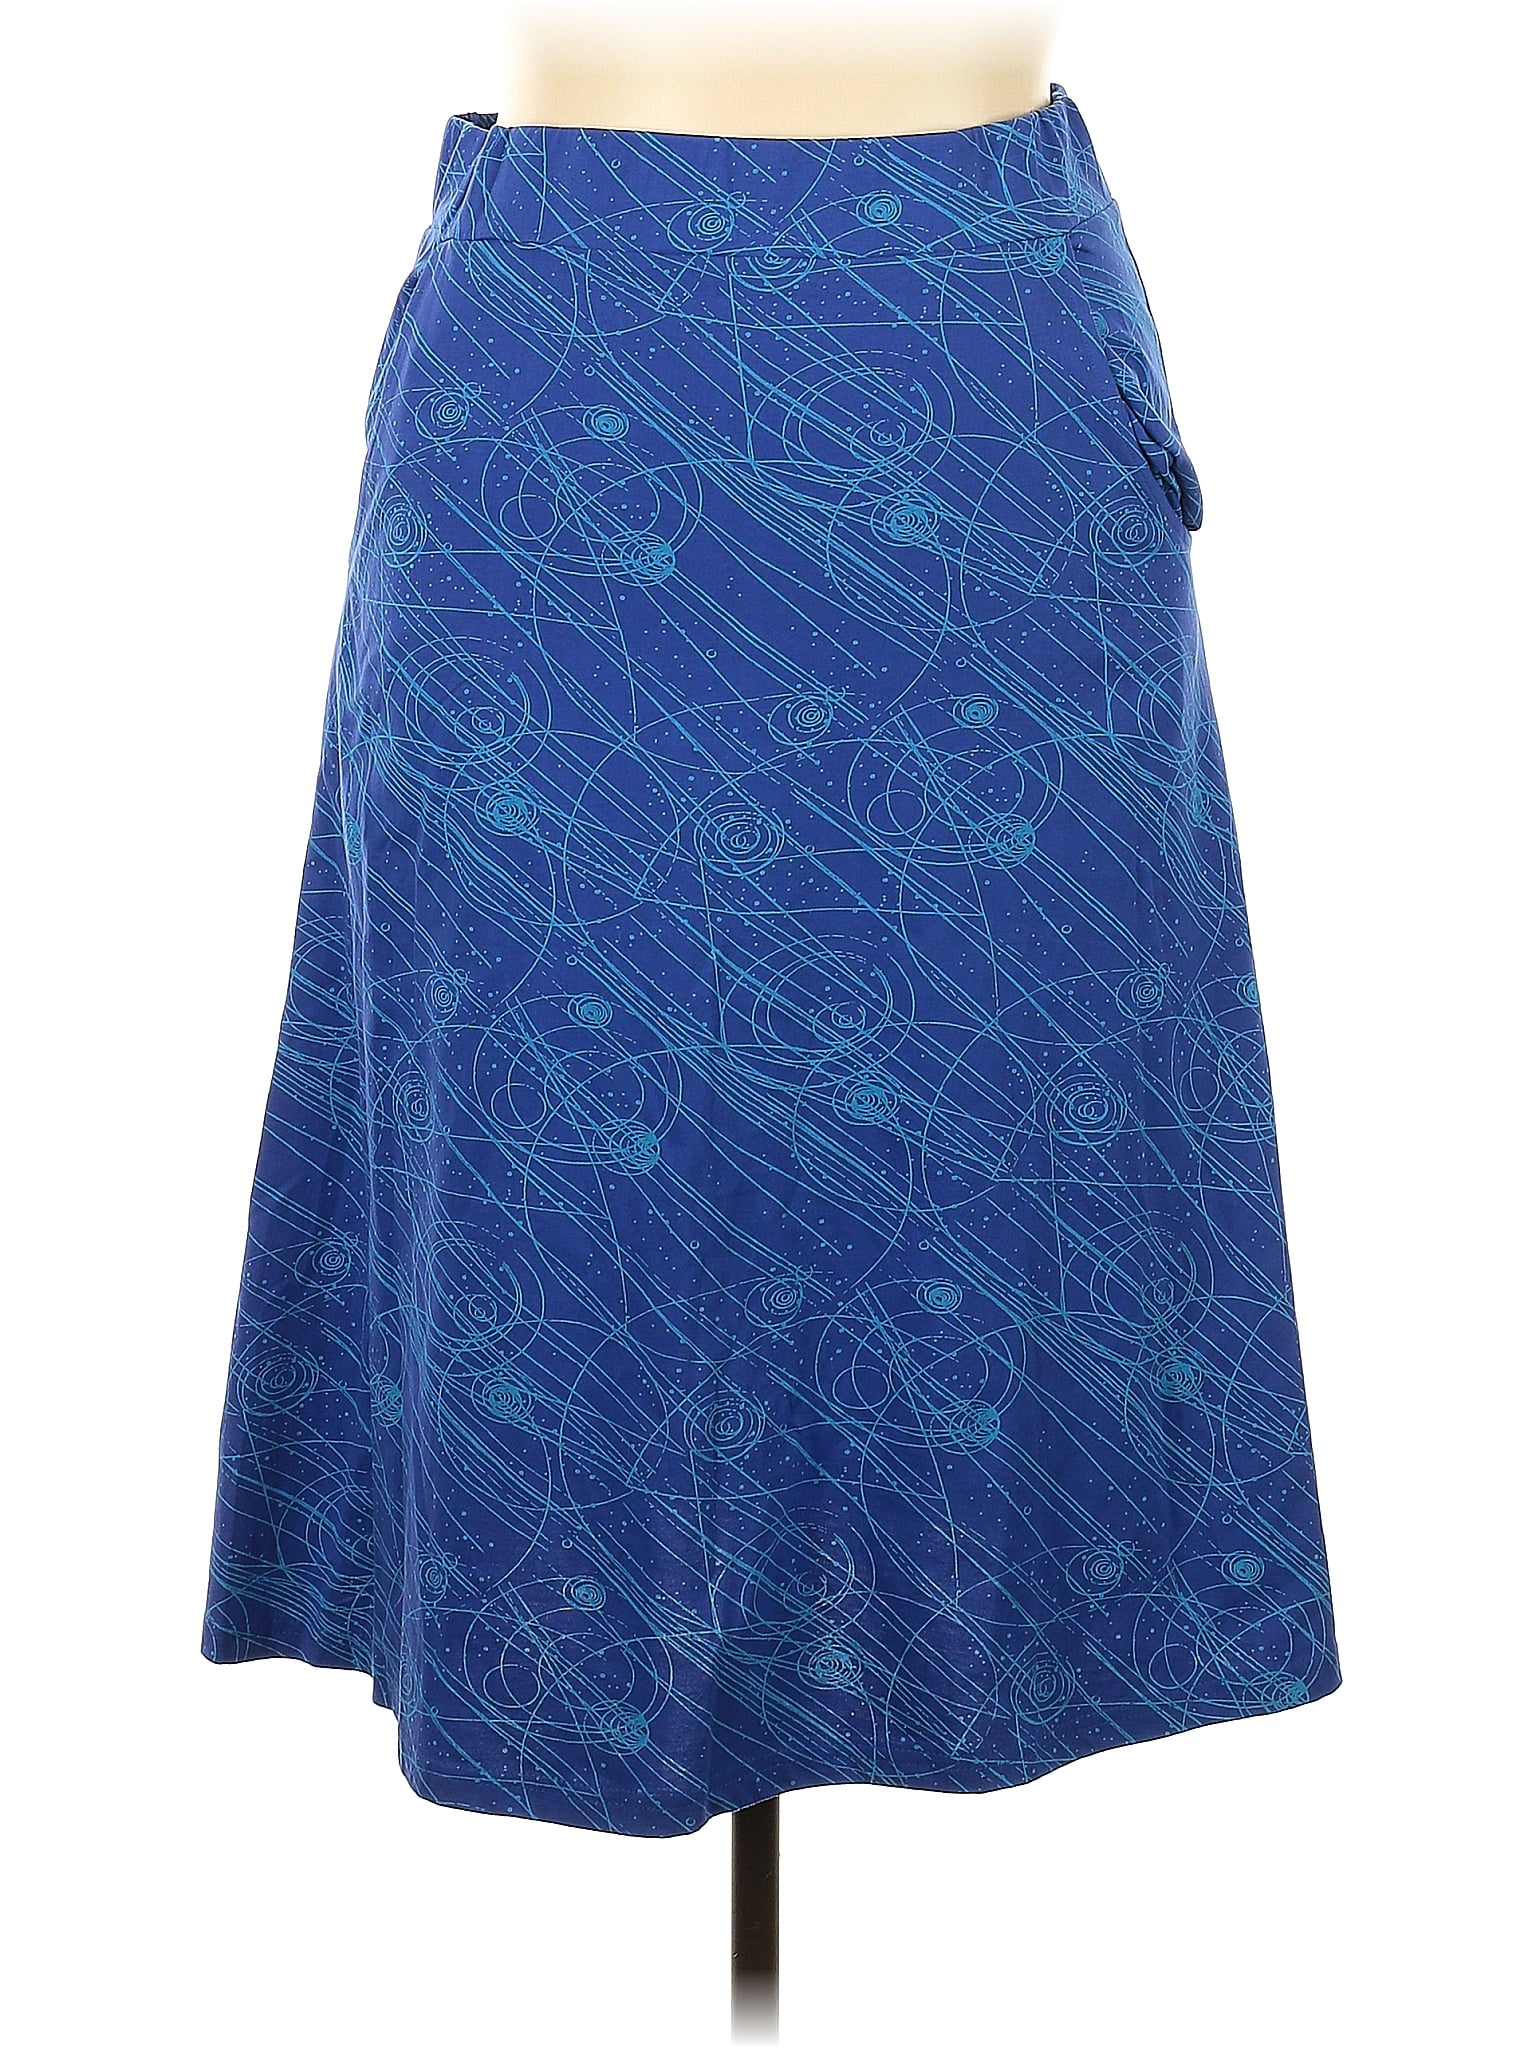 Svaha 100% Organic Cotton Blue Casual Skirt Size XL - 64% off | thredUP